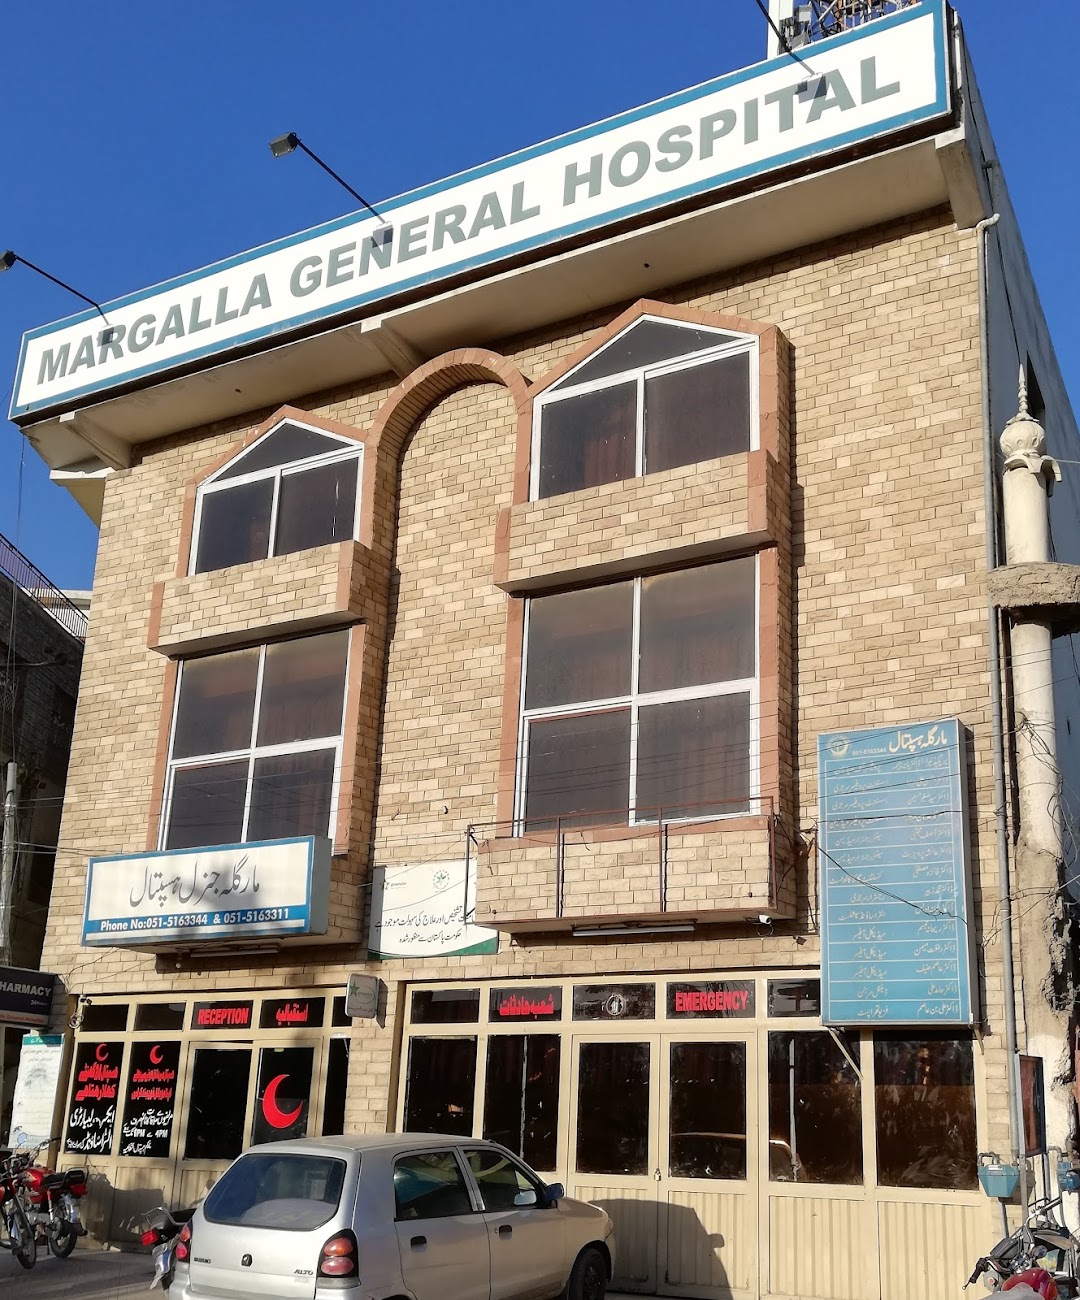 Margalla General Hospital